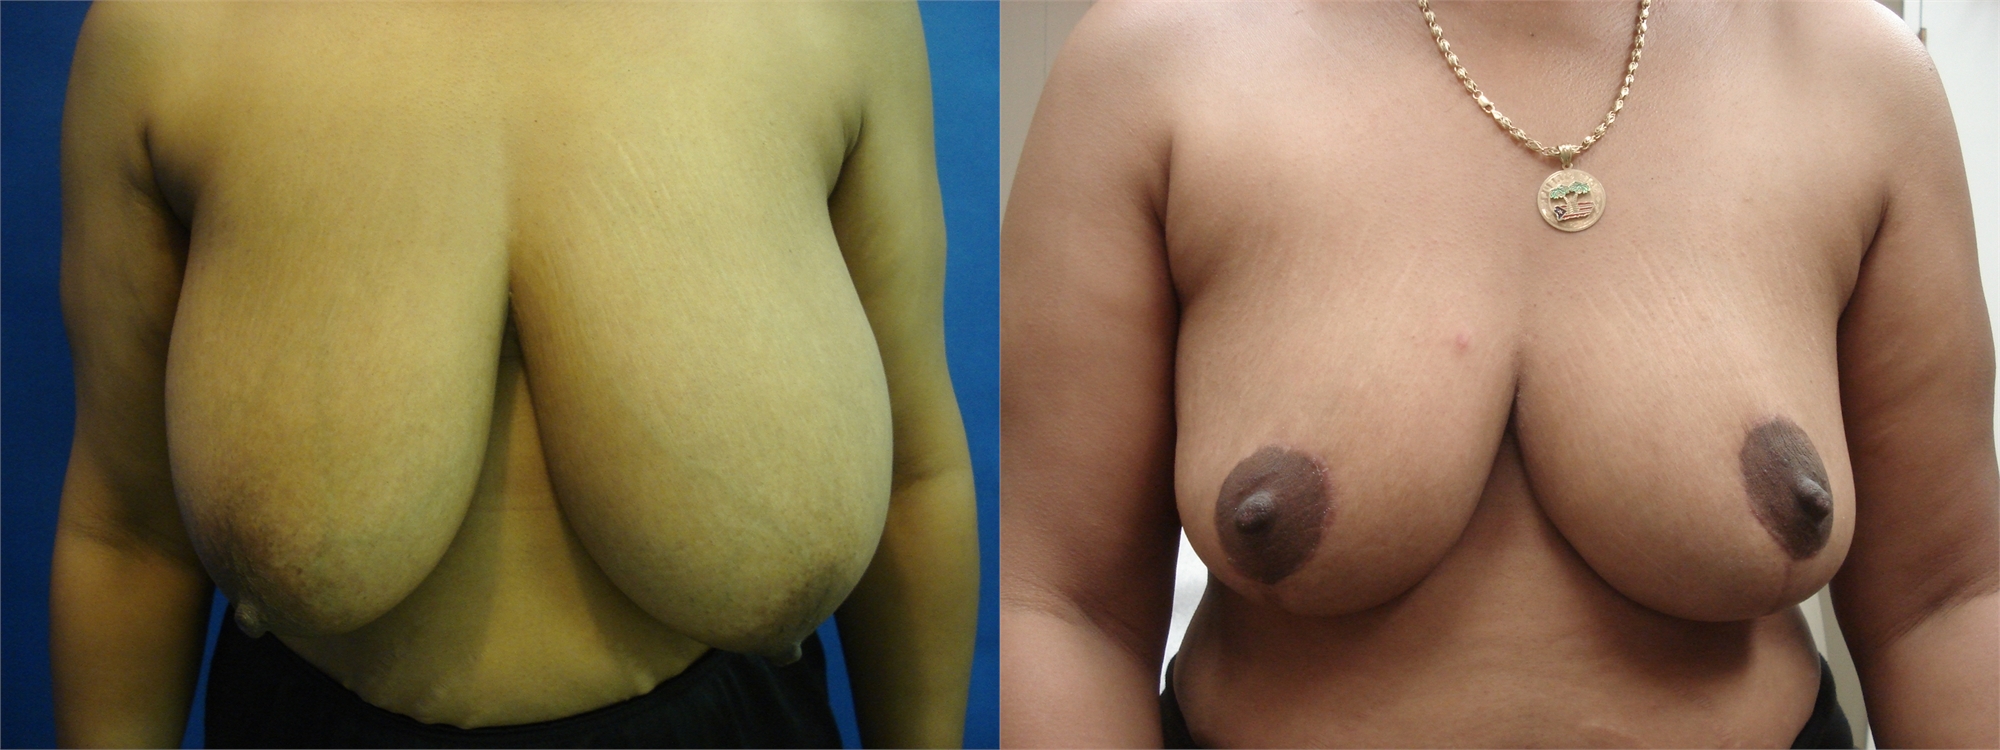 Breast Lift Before and After Surgery Tacoma, WA